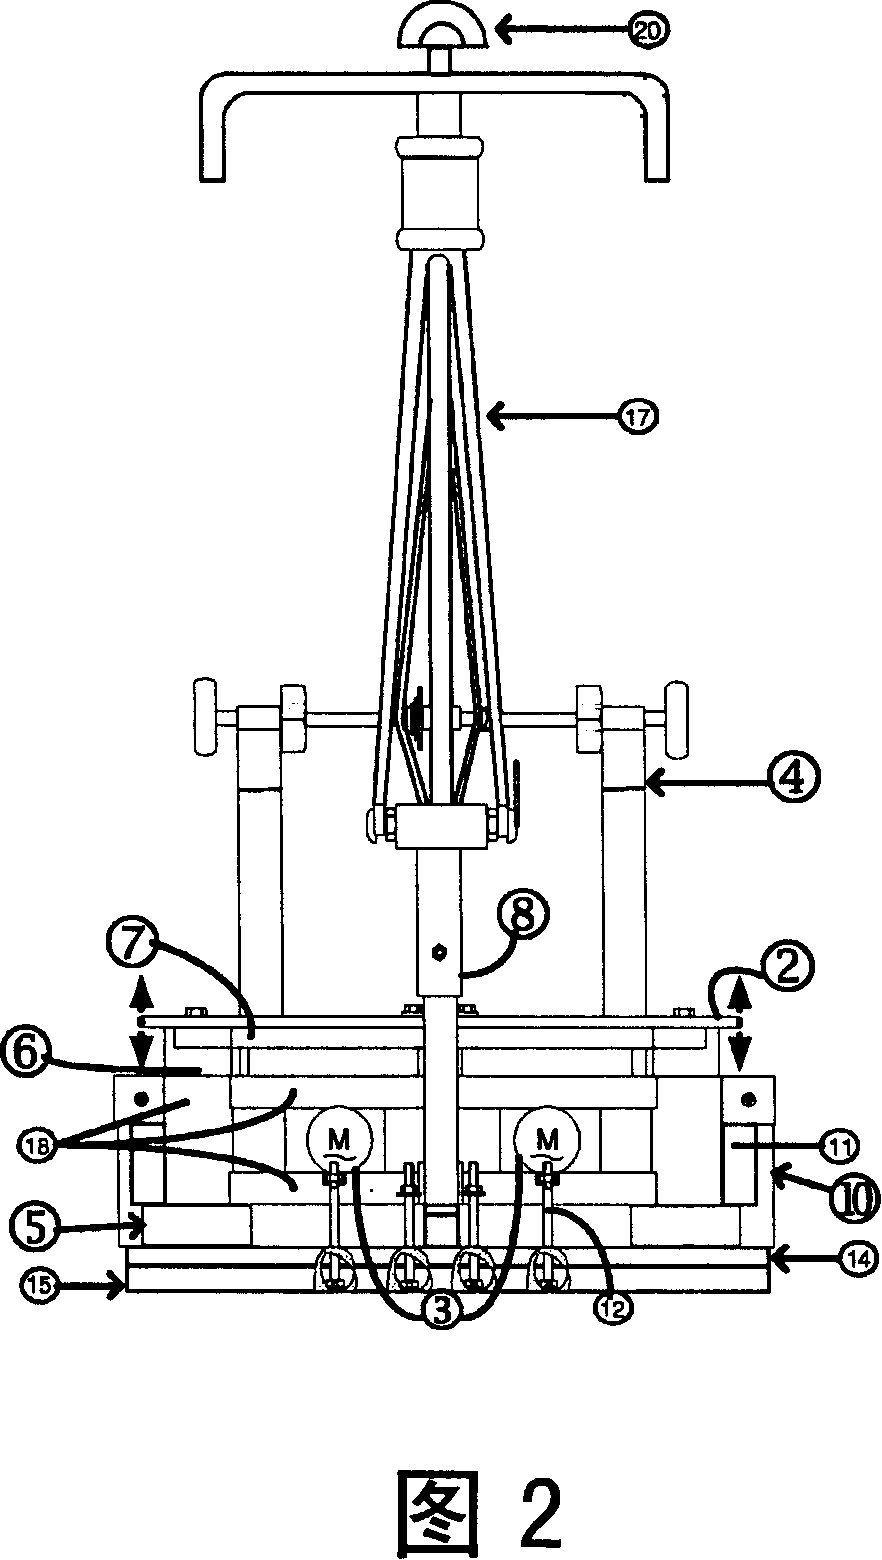 Vibration dynamometer